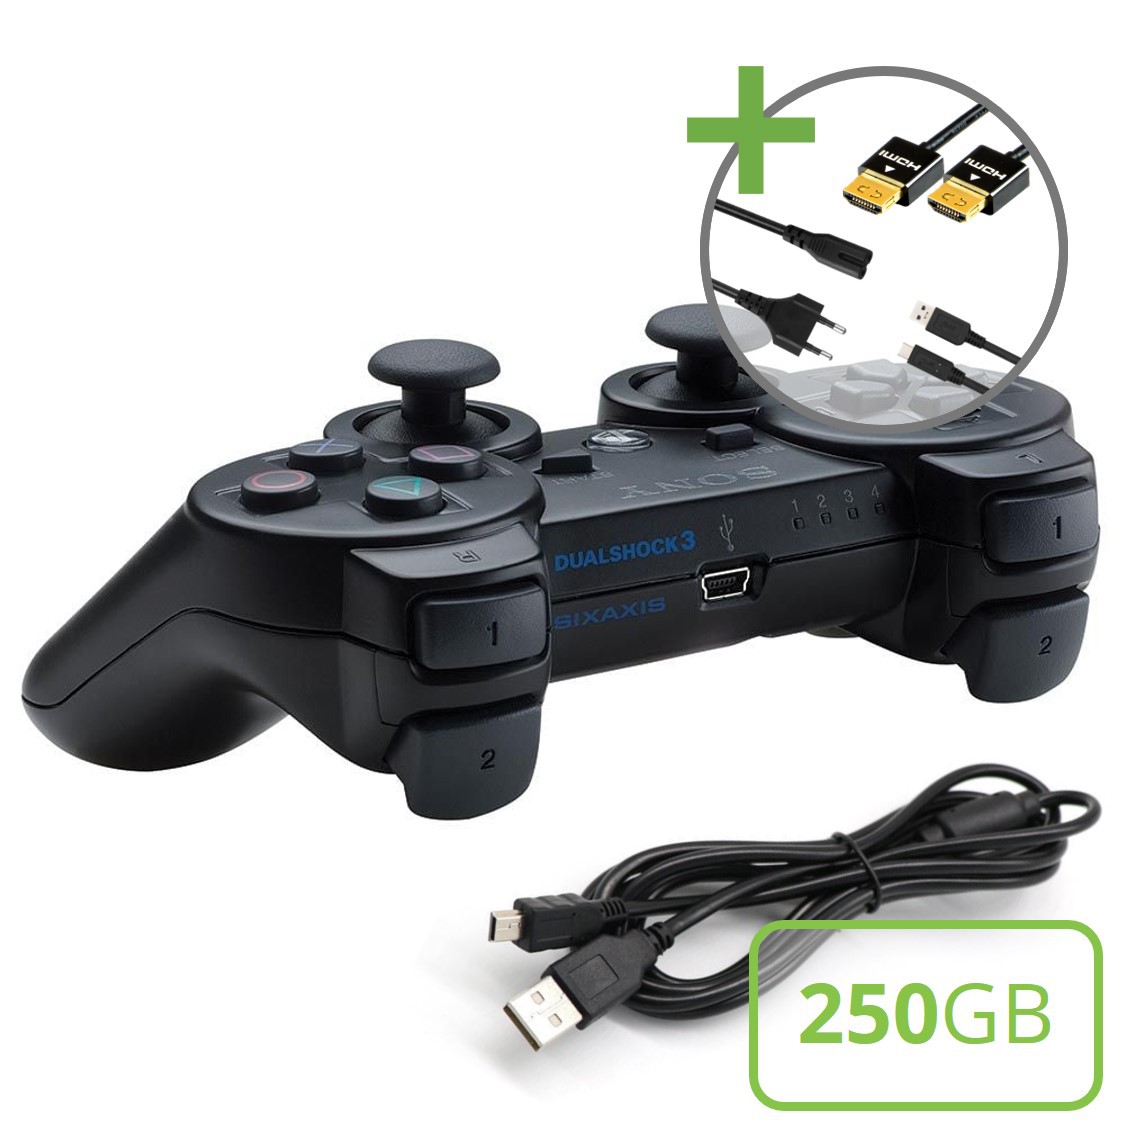 Sony PlayStation 3 Slim (250GB) Starter Pack - DualShock Edition - Playstation 3 Hardware - 4